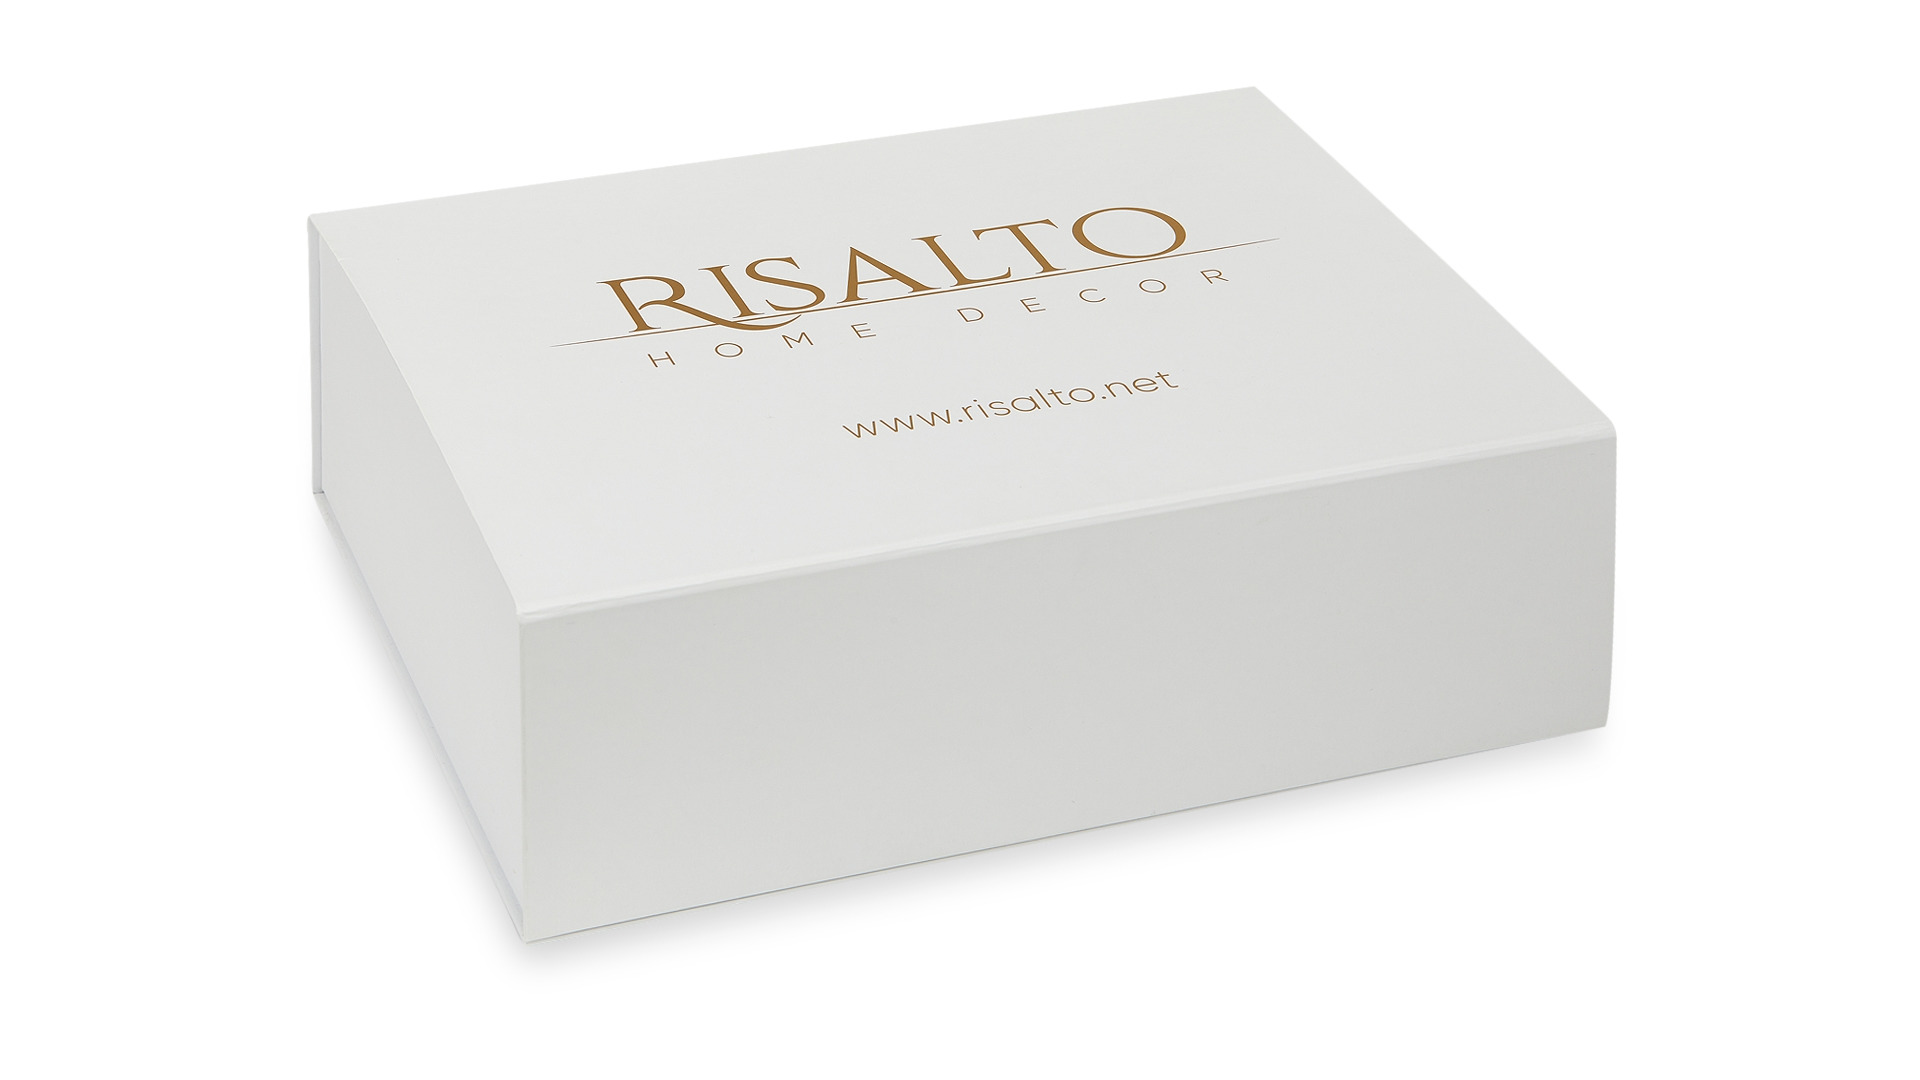 Подарочный набор Risalto ваза Черное золото, рефилл Ghiaccio e neve Холодный лед 500 мл